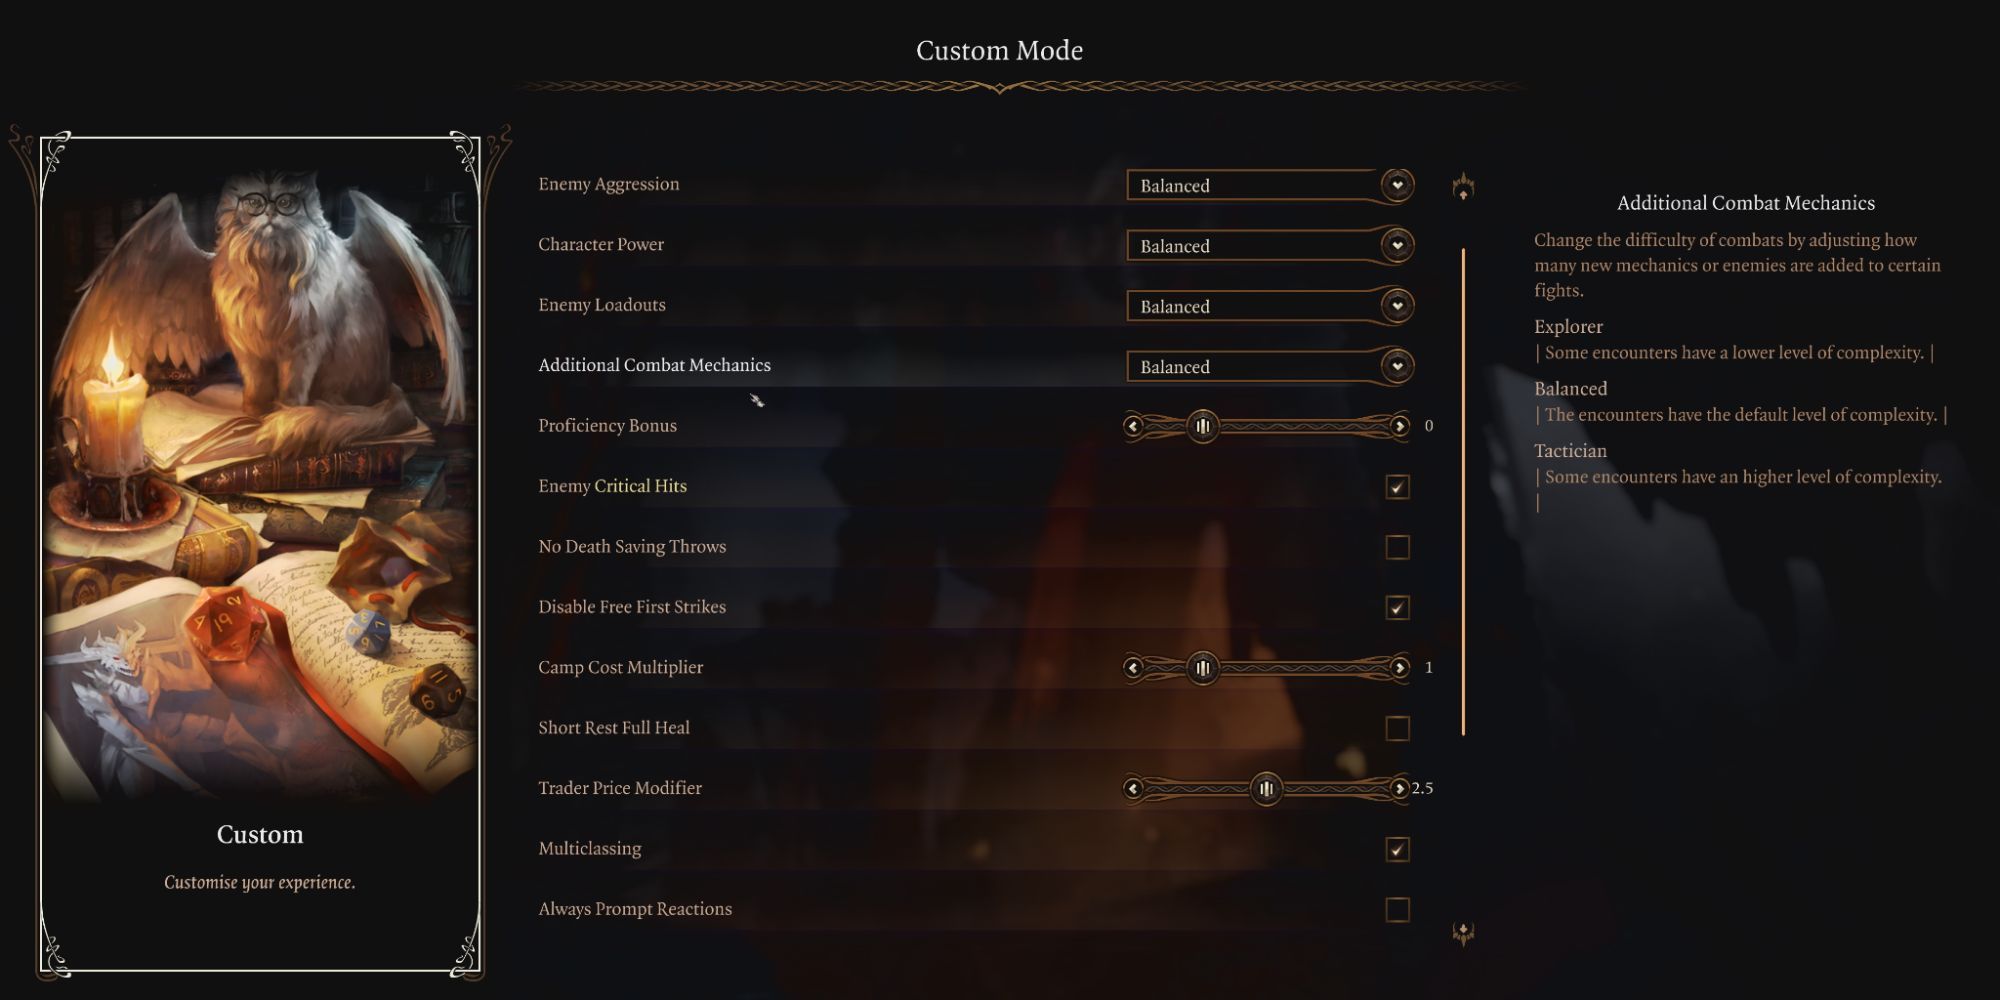 Some of the options presented in Baldur's Gate 3's Custom Mode.